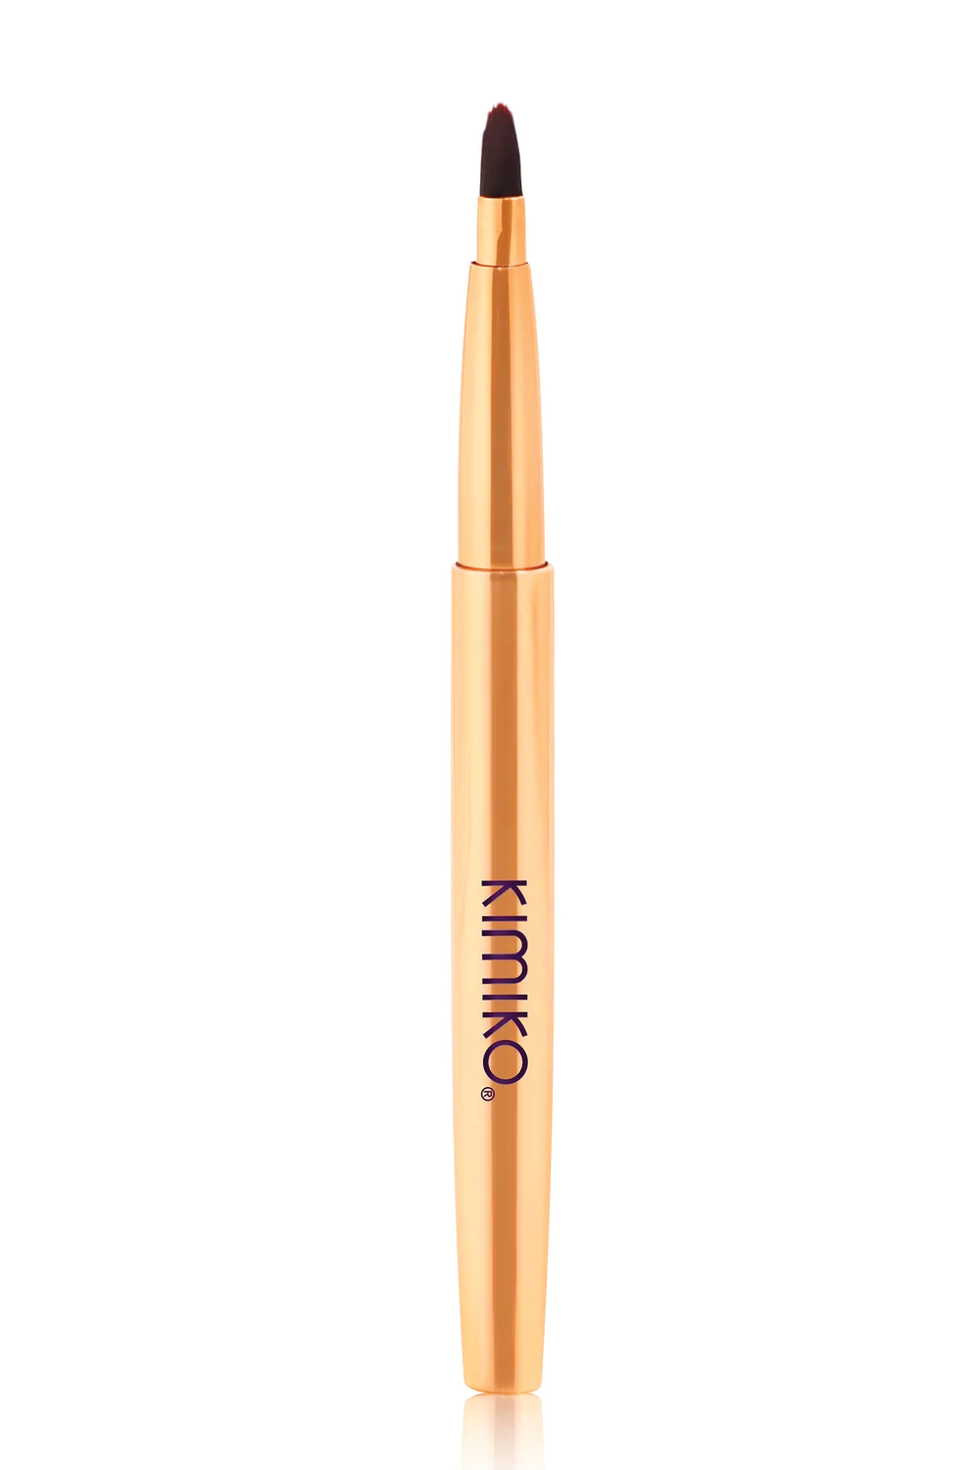 Kimiko Beauty The Precision Retractable Lip Brush To-Go